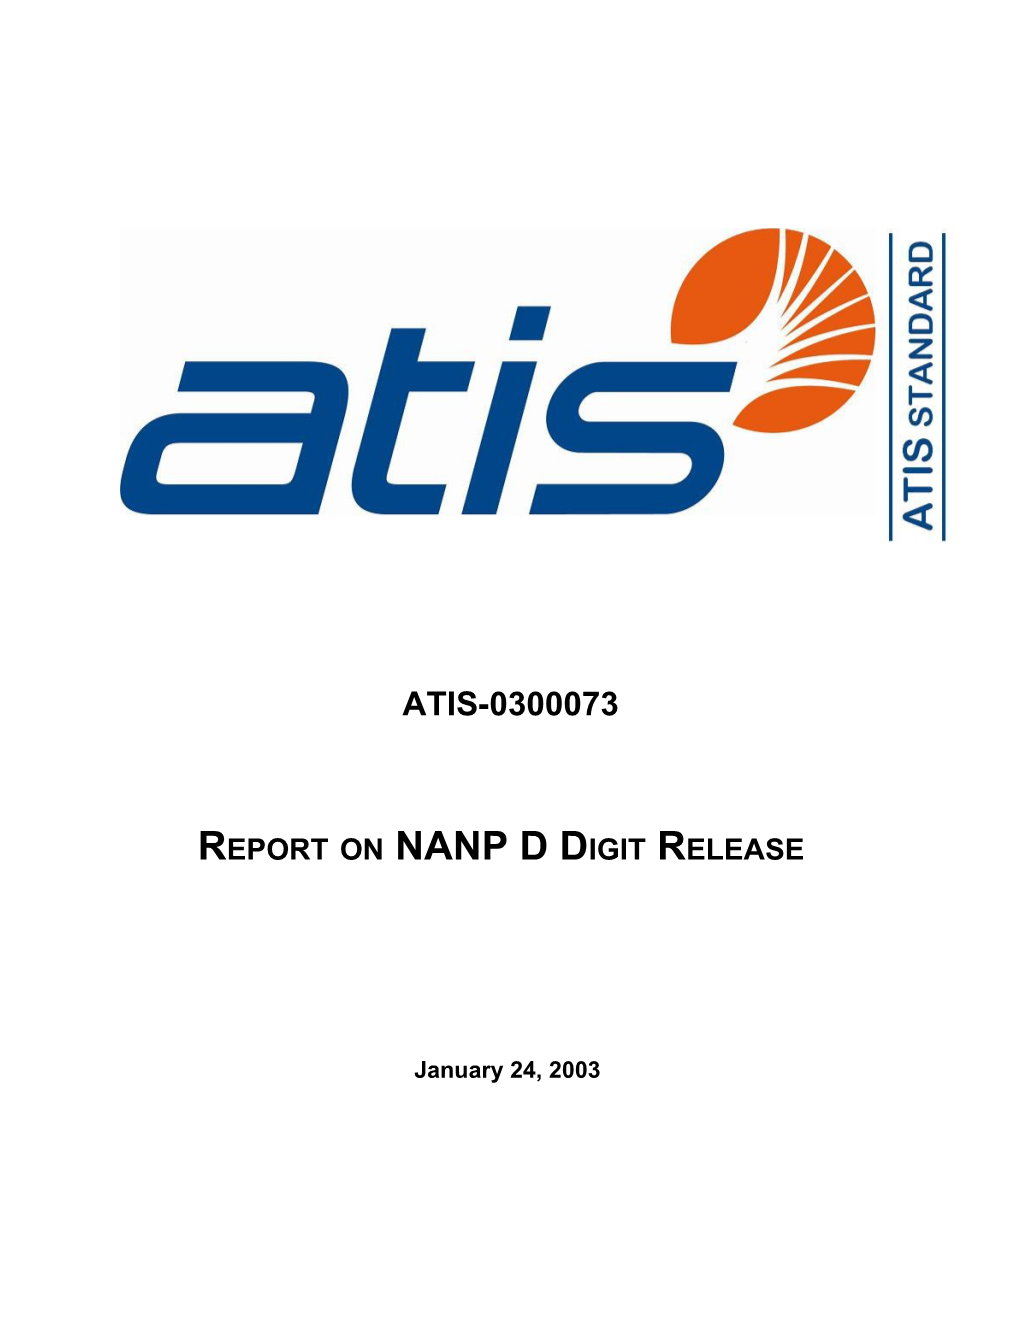 Report on NANP D Digit Release